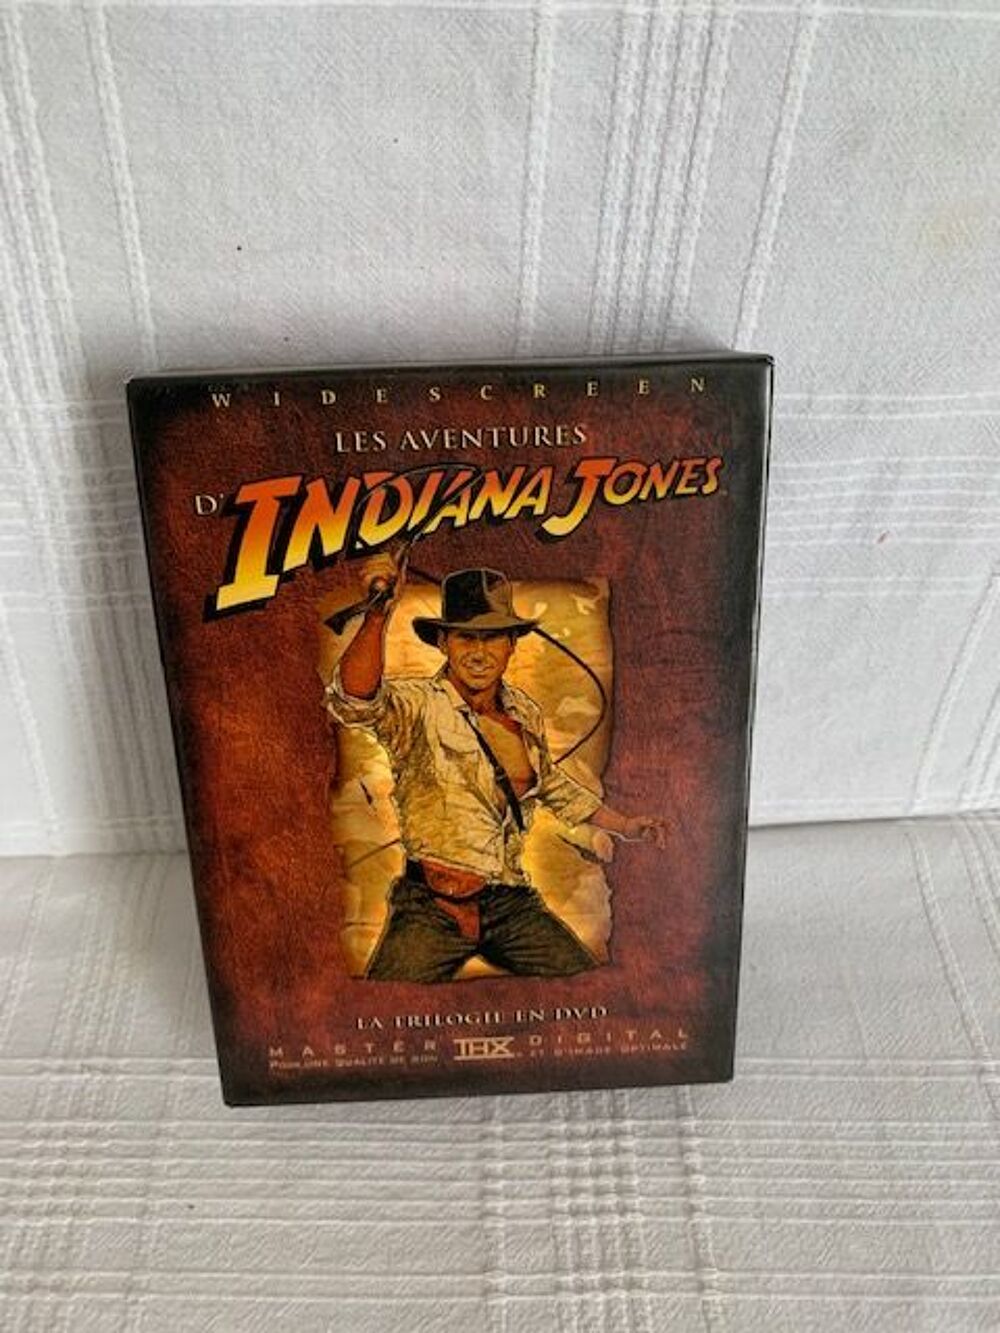 *A321 
Les Aventures d'Indiana Jones DVD et blu-ray